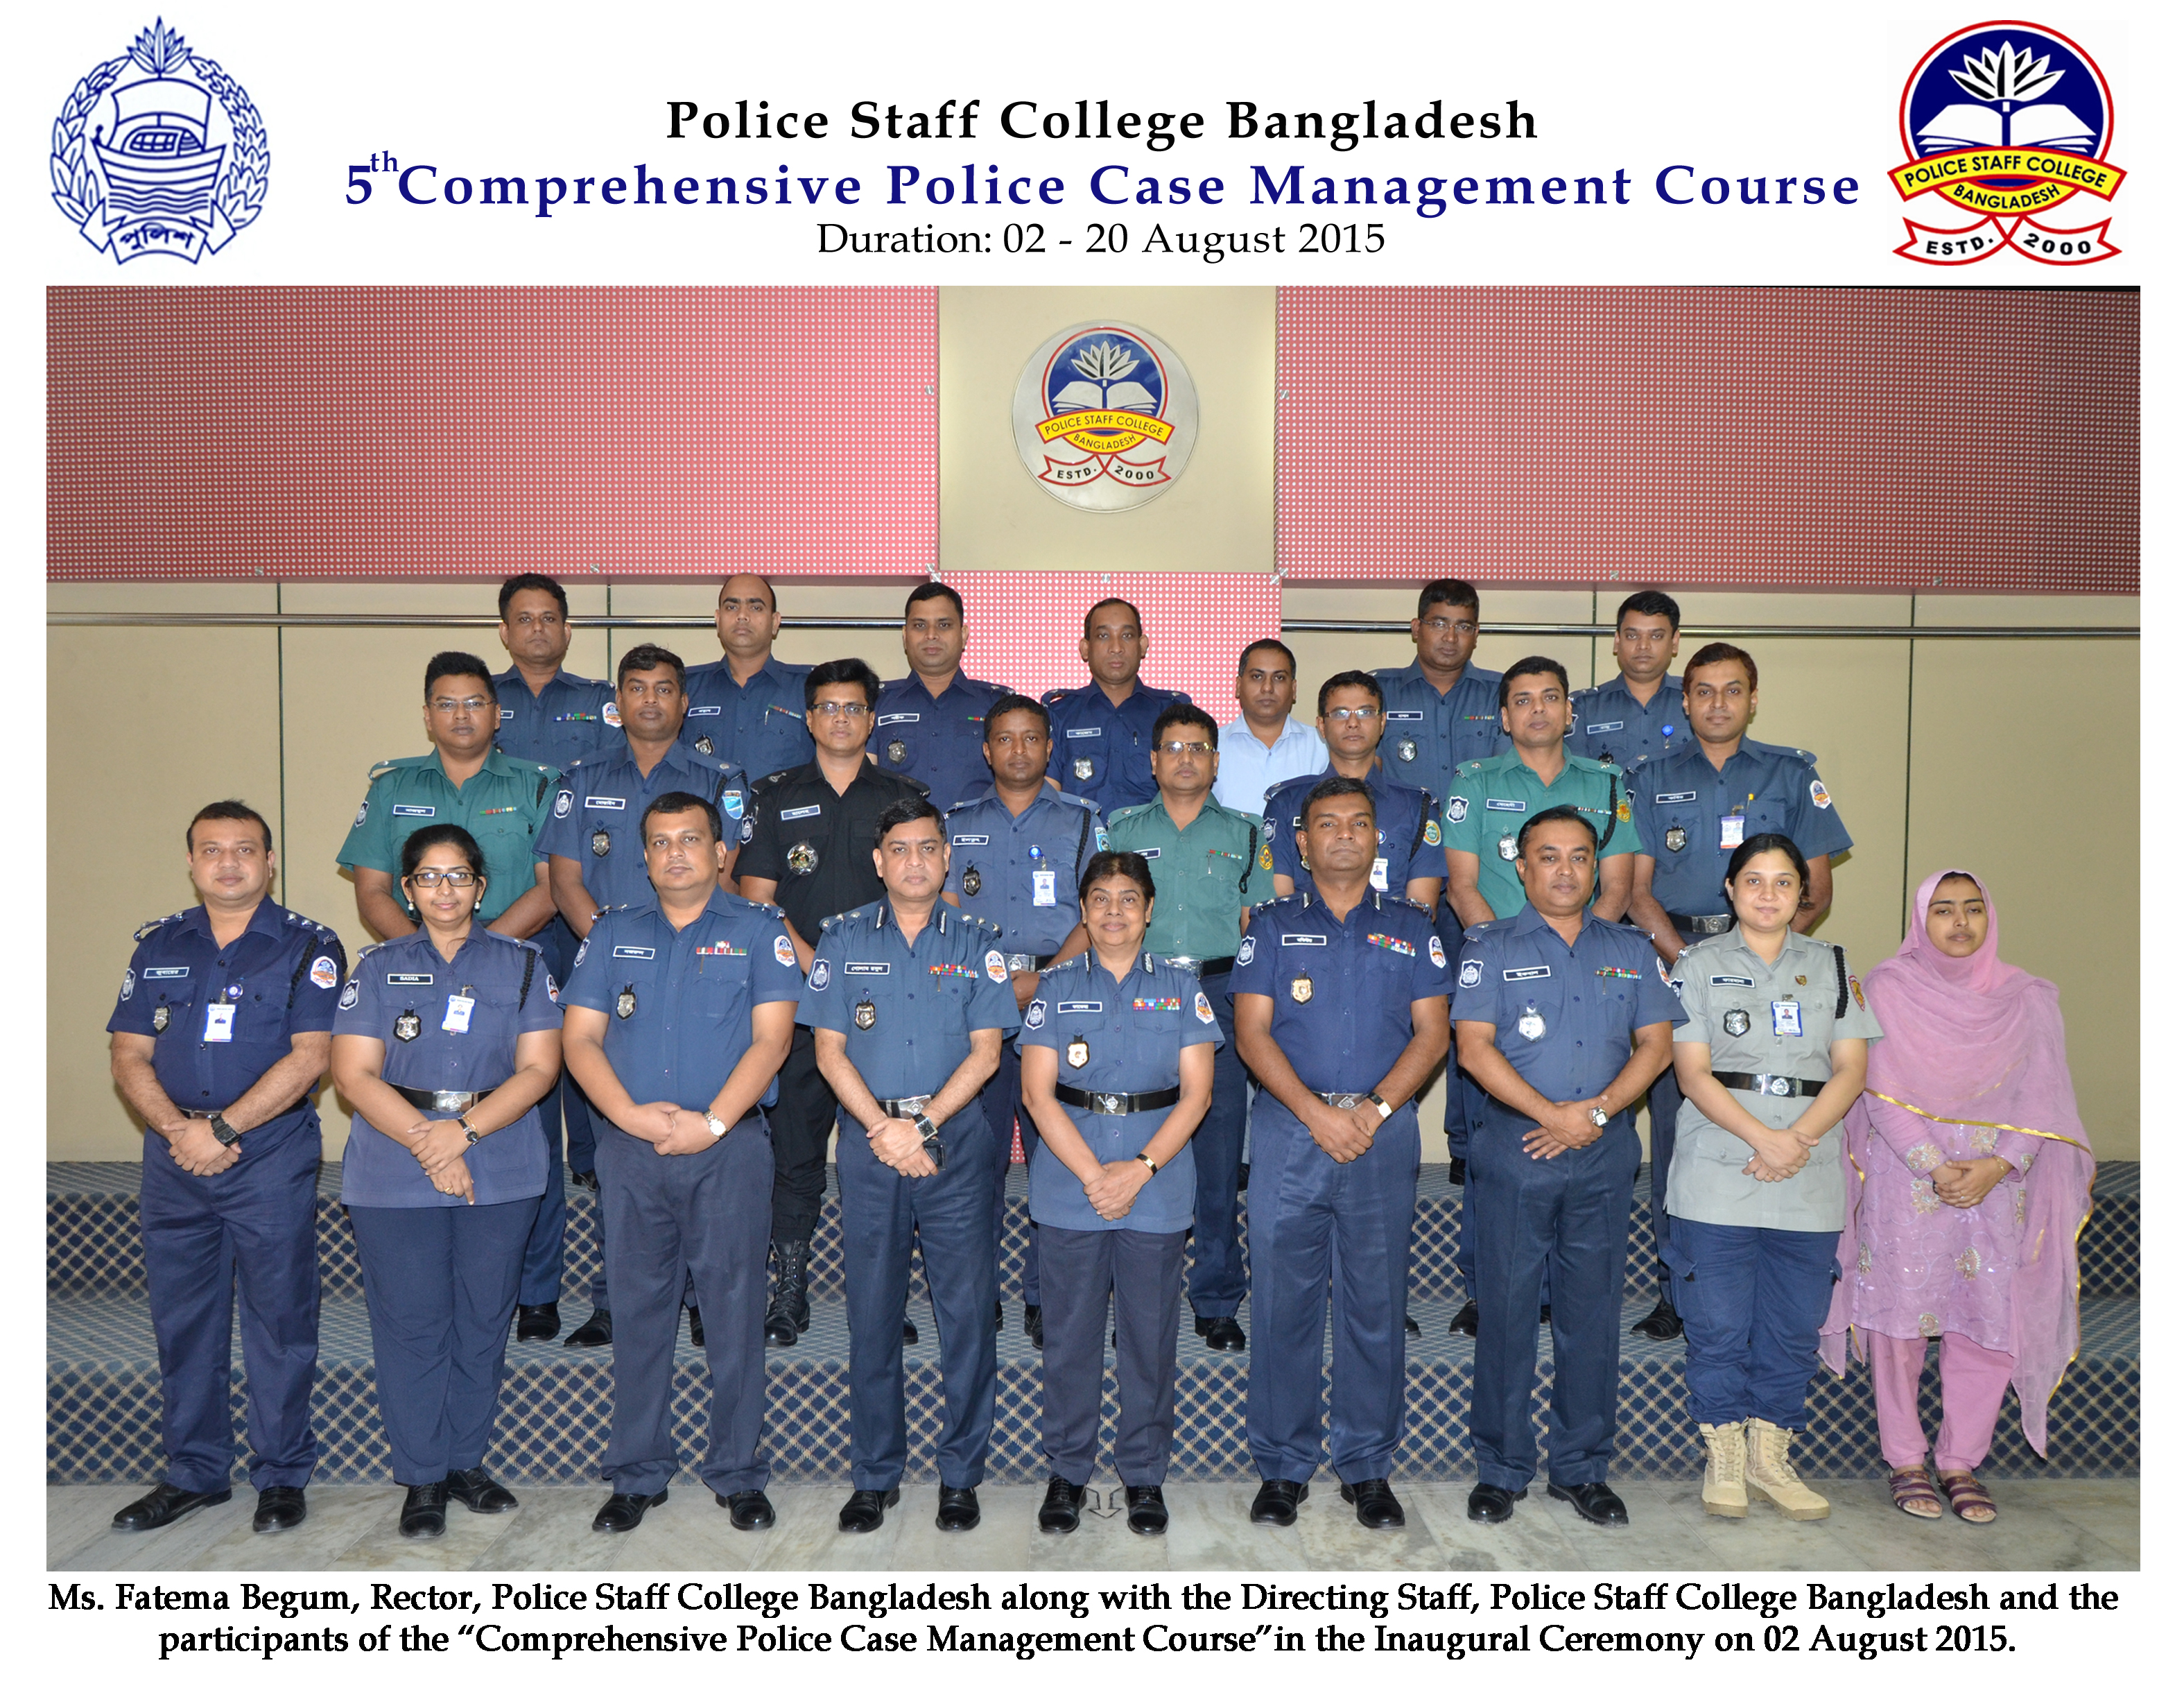 Participant of 5th Comprehensive Police Case Management Course